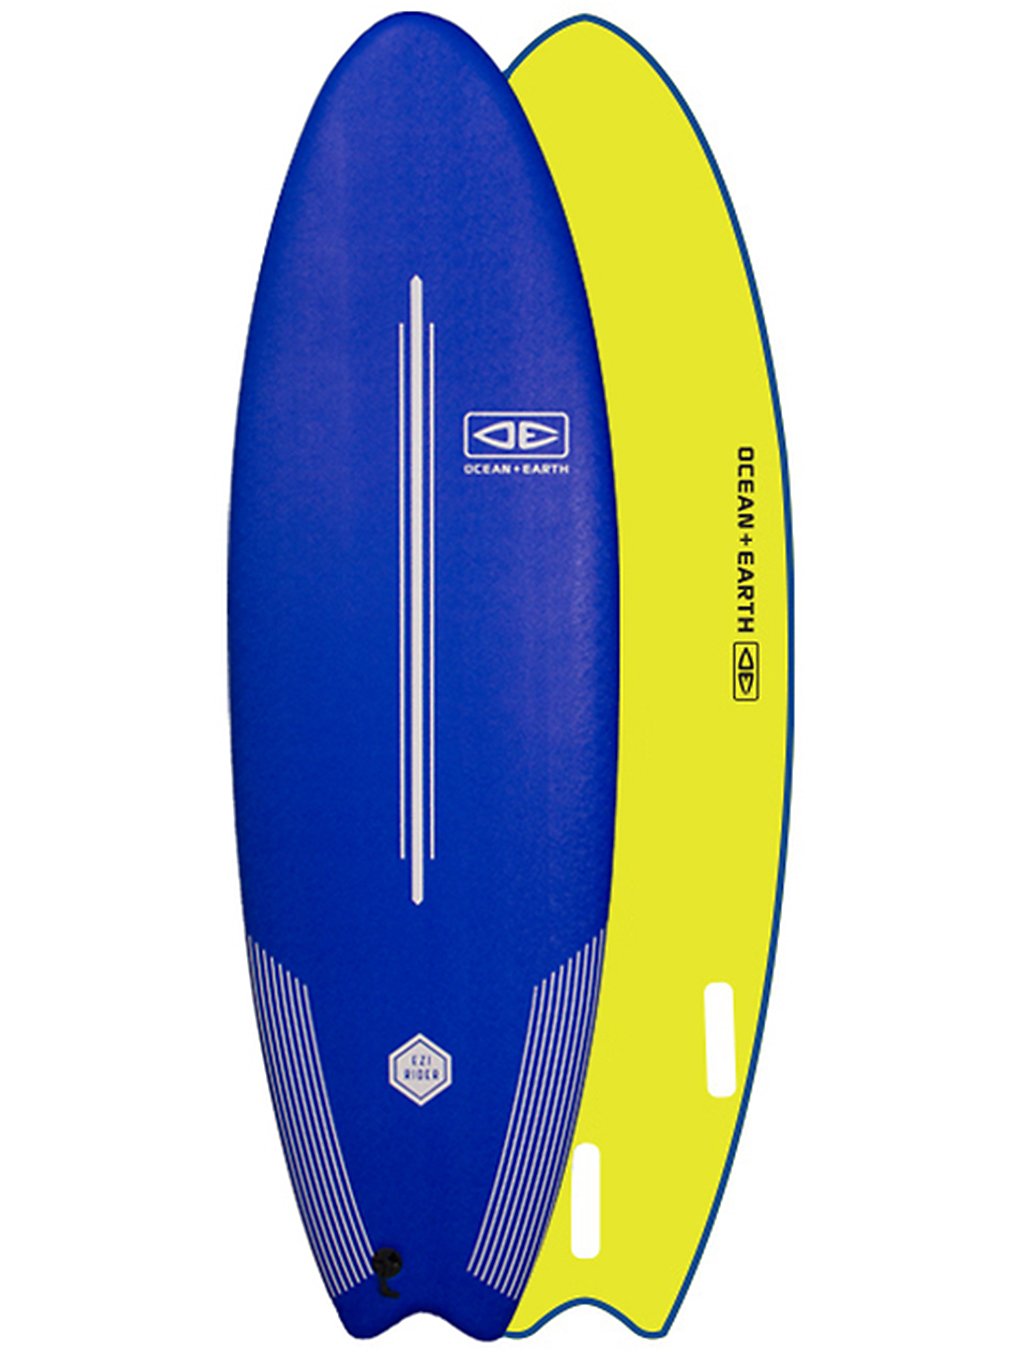 Ocean & Earth Ezi Rider 5'6 Surfboard navy